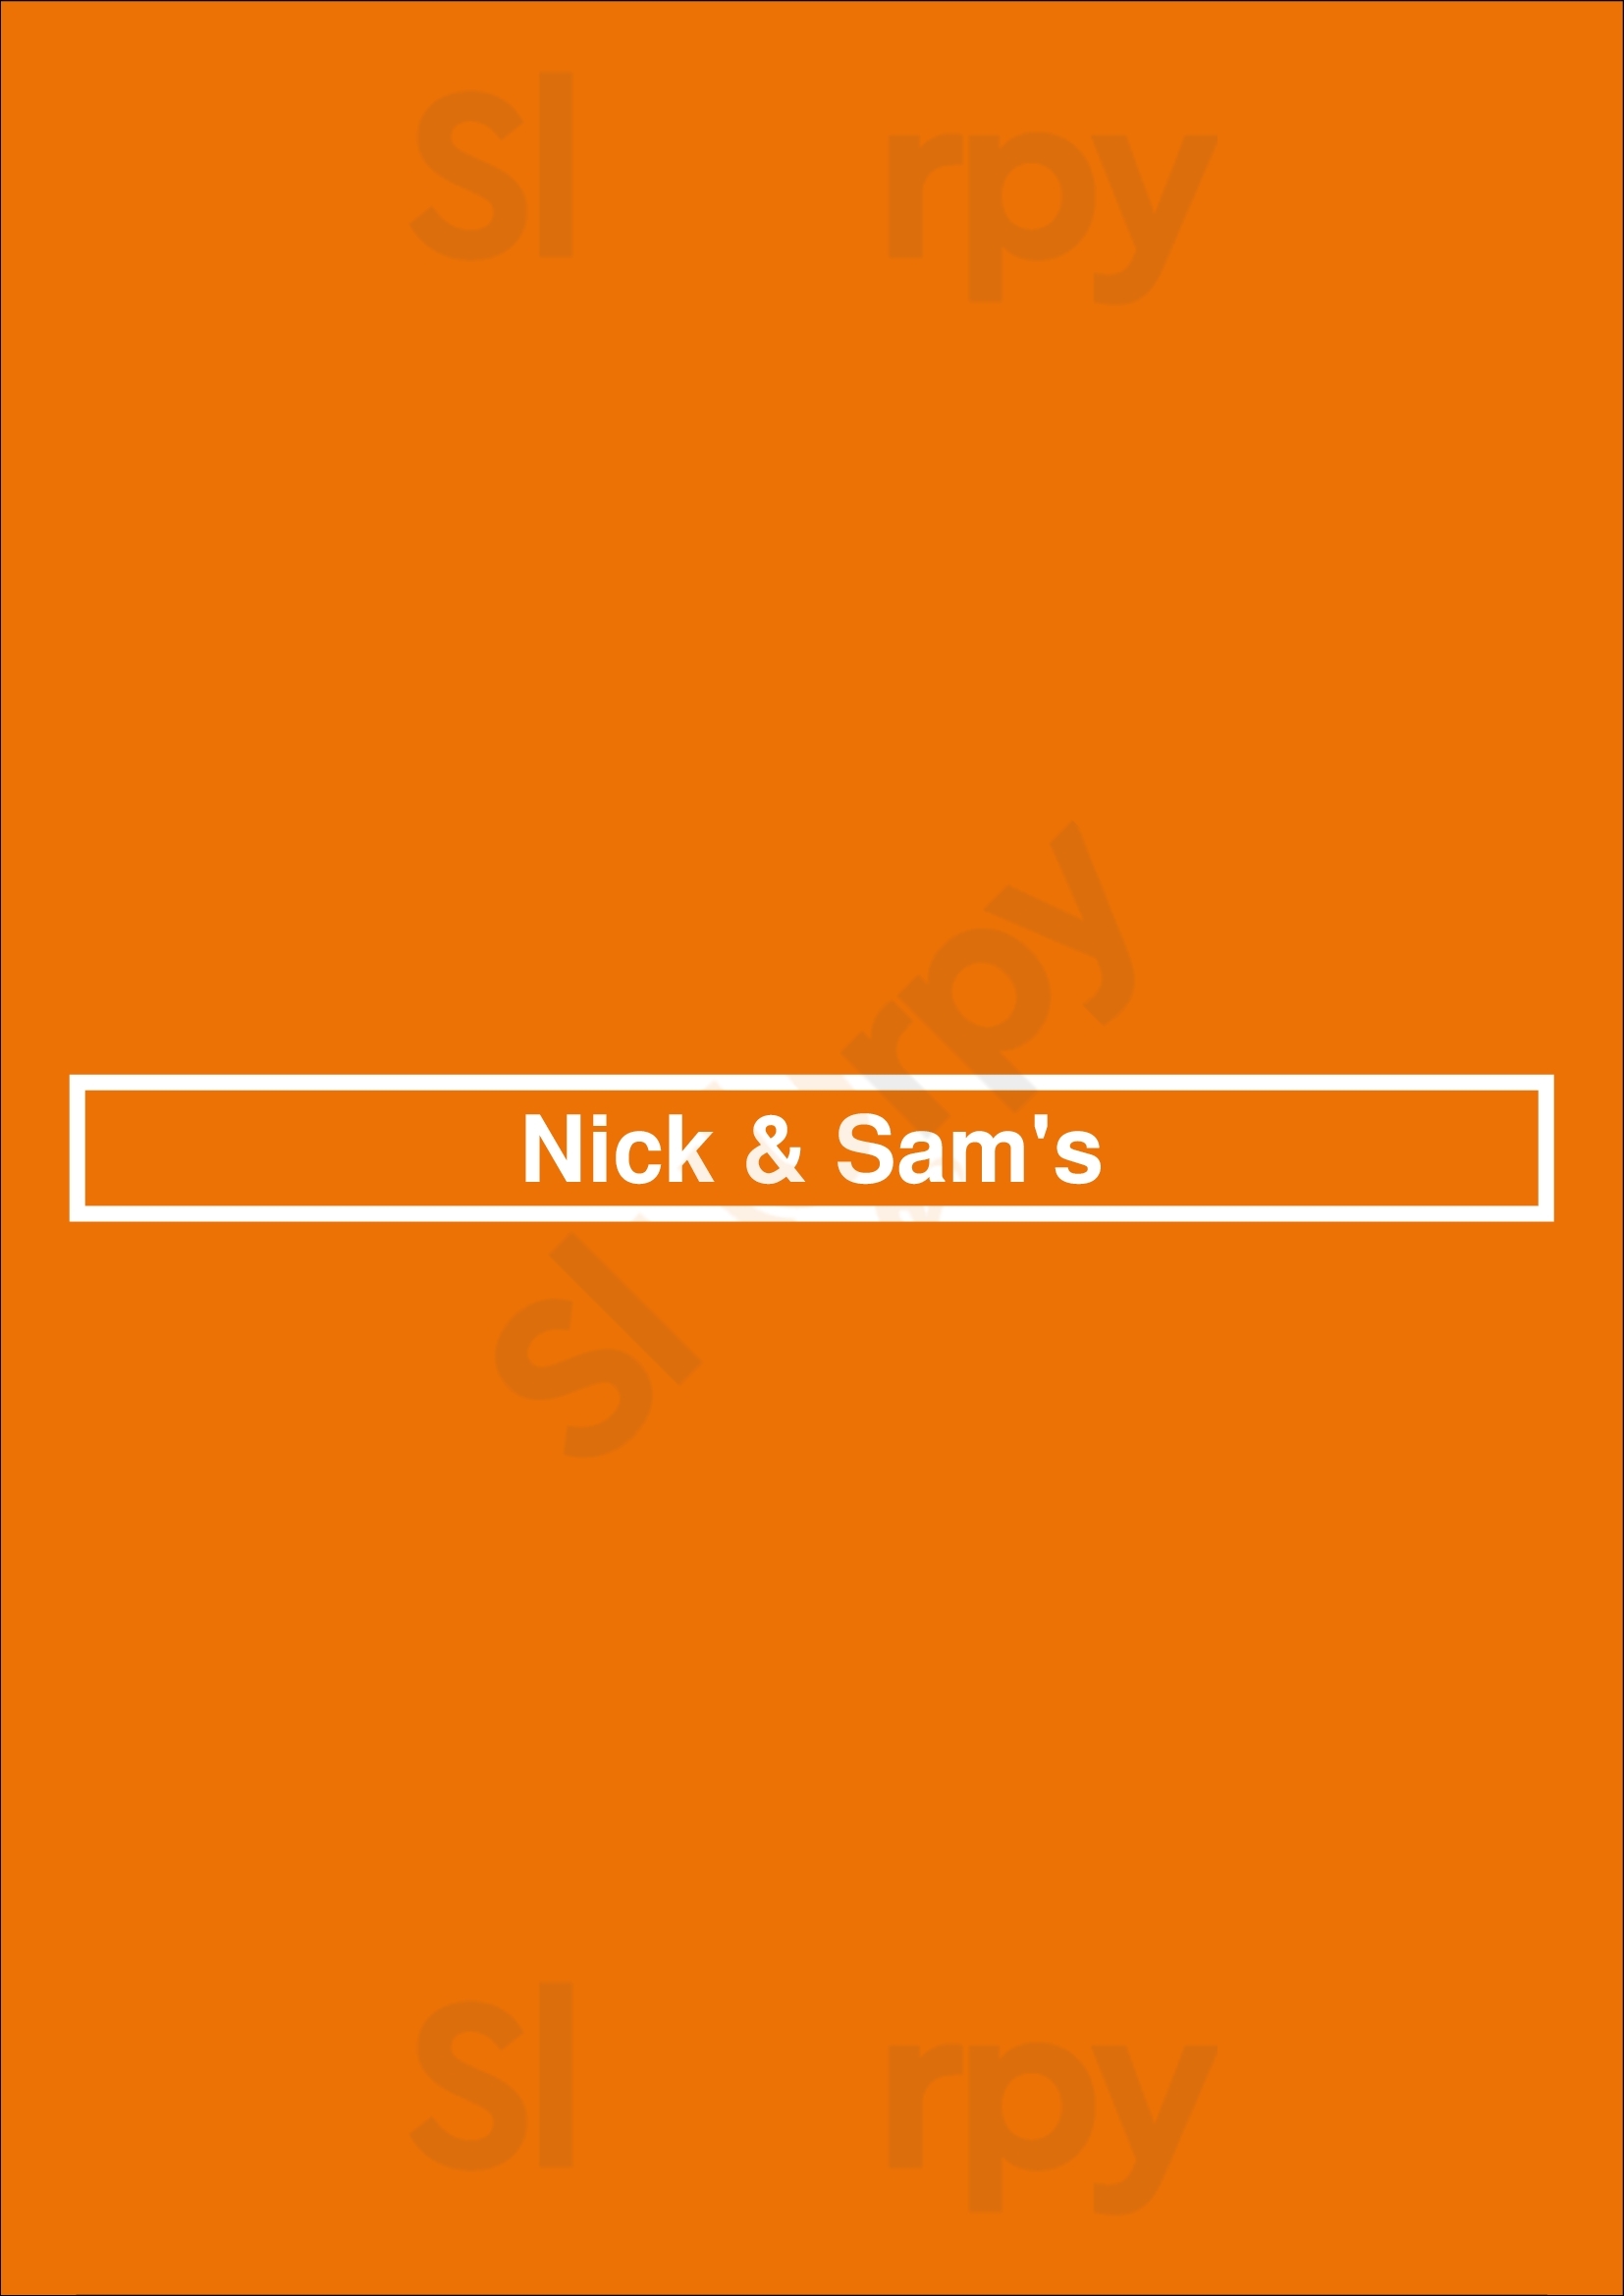 Nick & Sam's Dallas Menu - 1